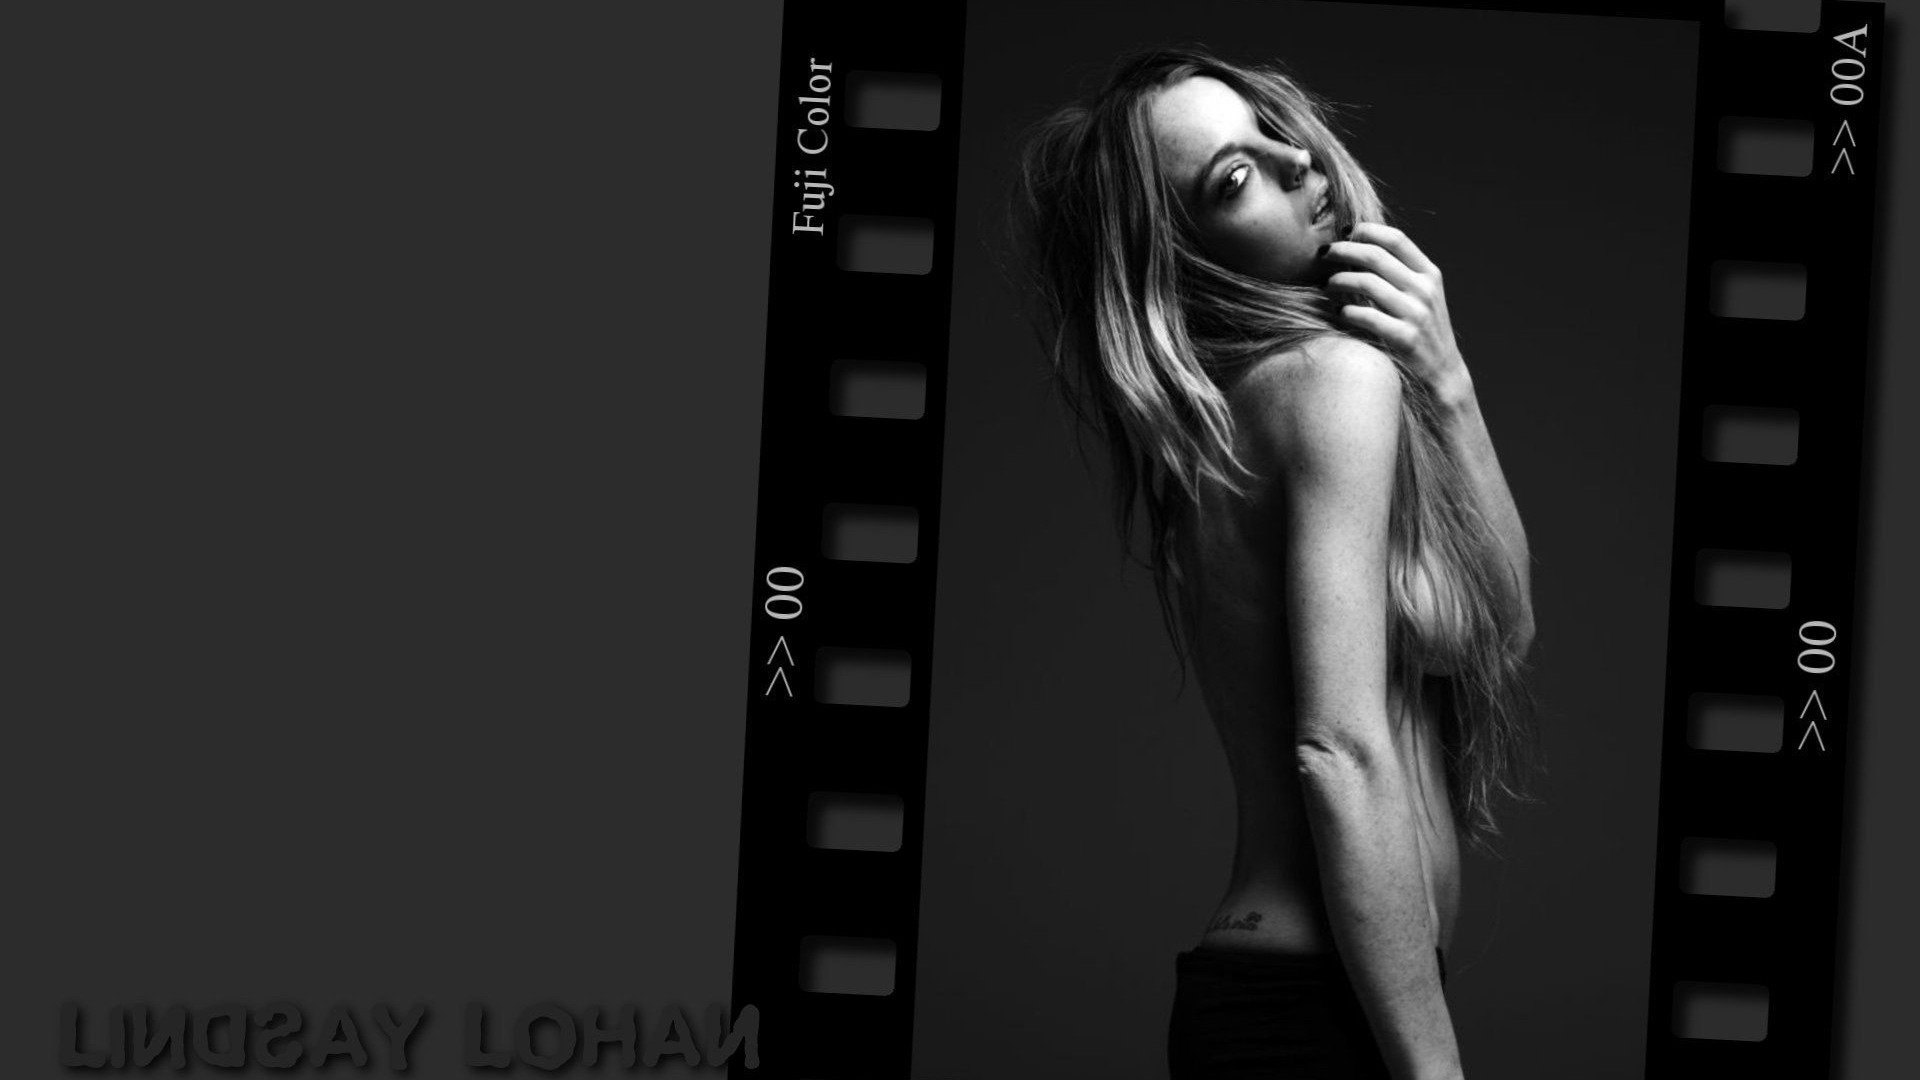 Lindsay Lohan beautiful wallpaper #25 - 1920x1080